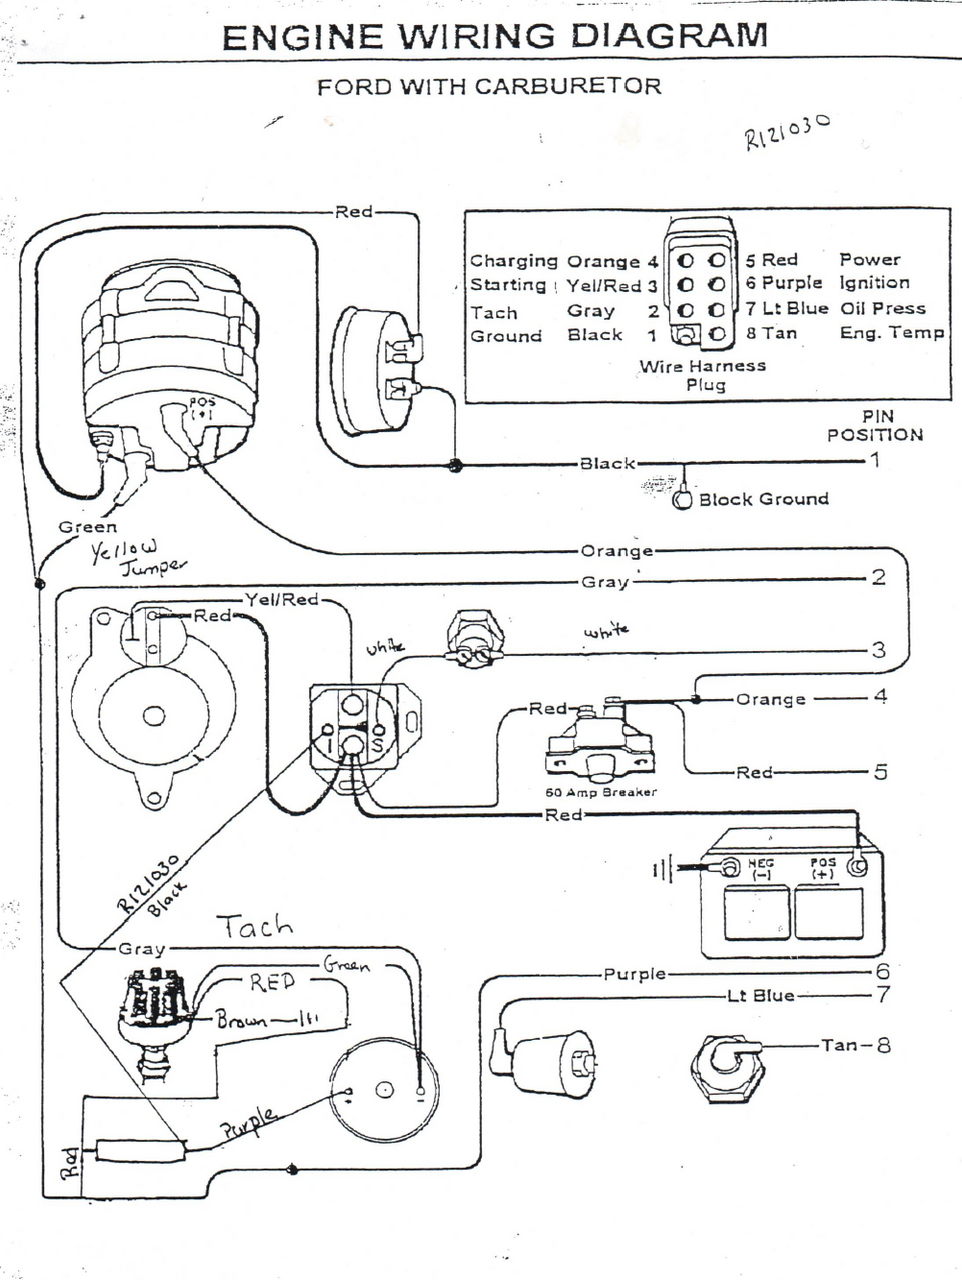 Starter, RH, Reverse Rotation - Permanent Magnet, Starter Kit for older Correct Craft boats prior to 1989, #70201